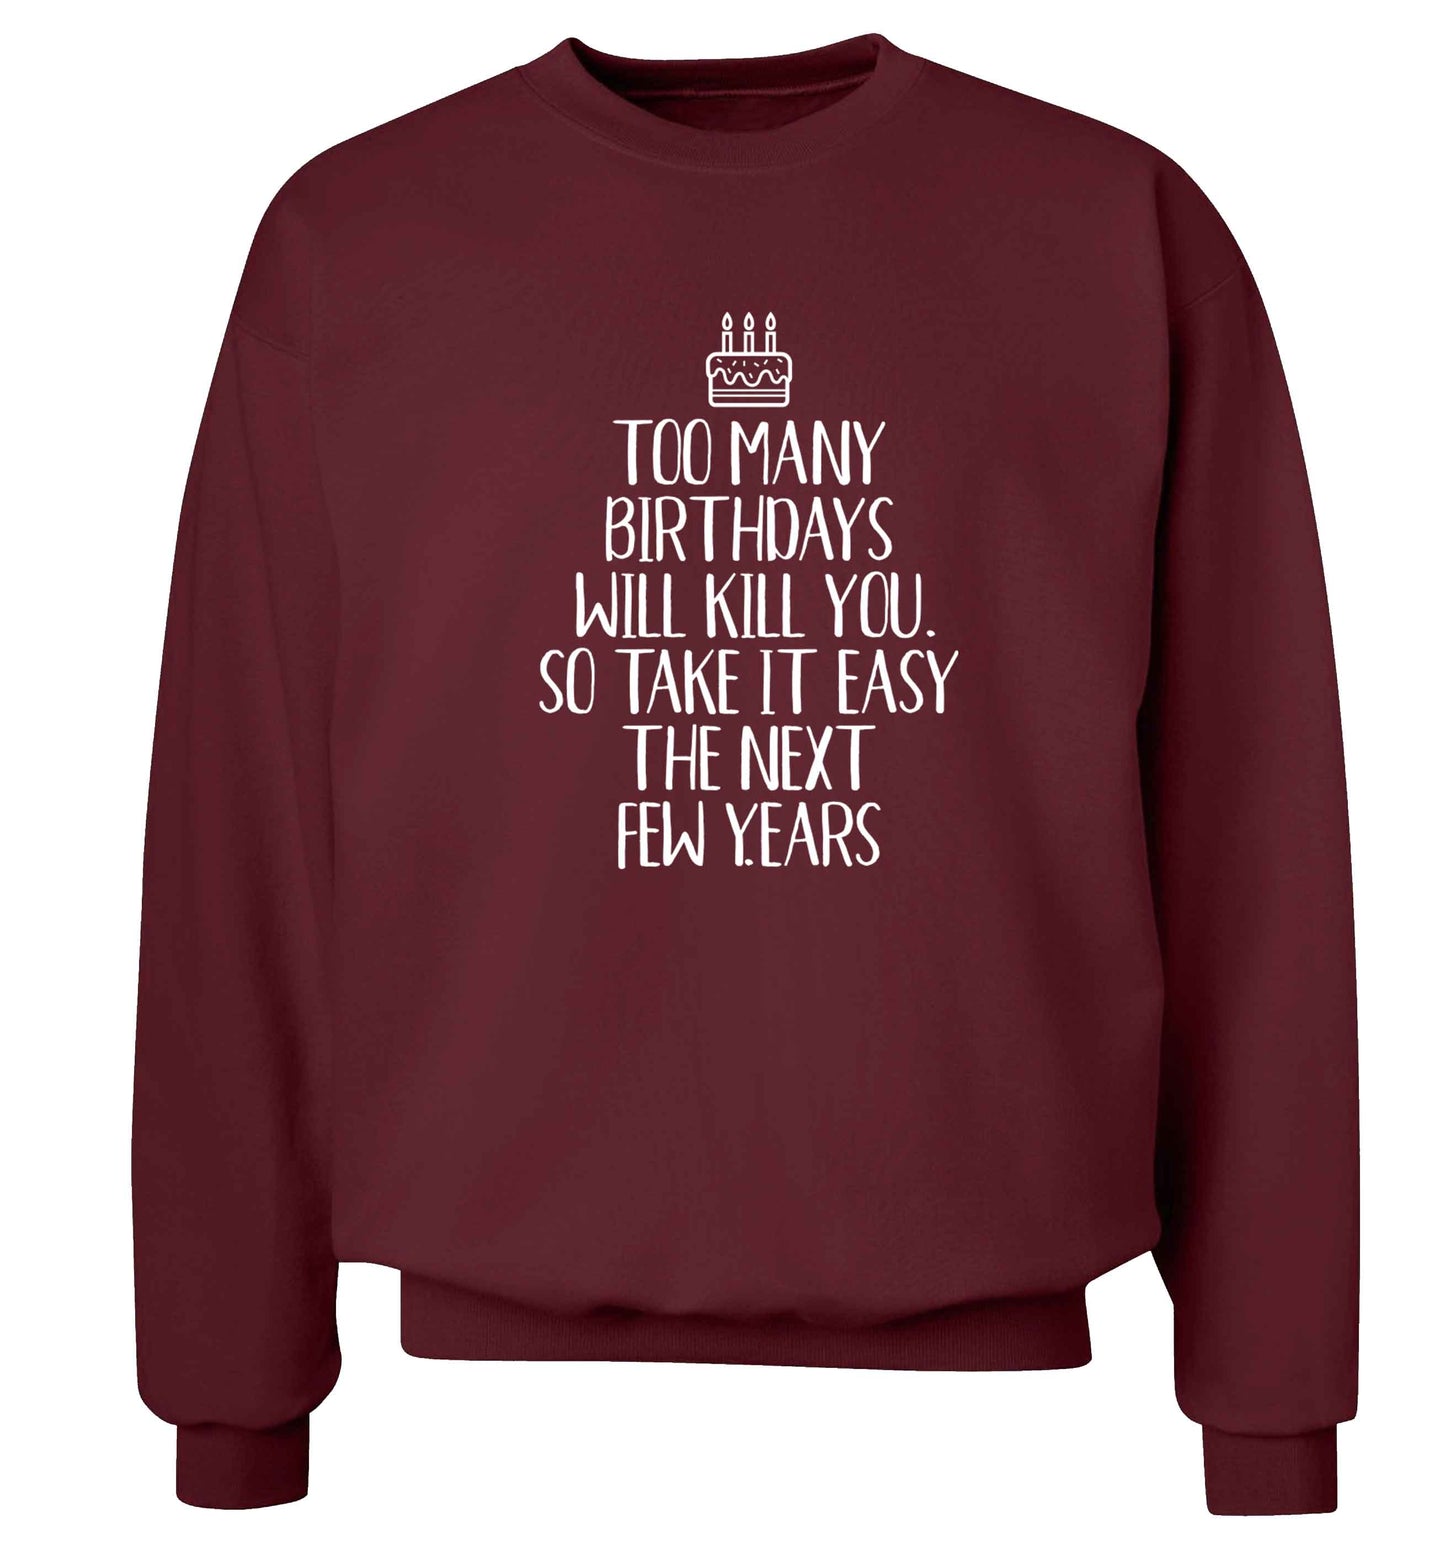 Too many birthdays will kill you so take it easy Adult's unisex maroon Sweater 2XL